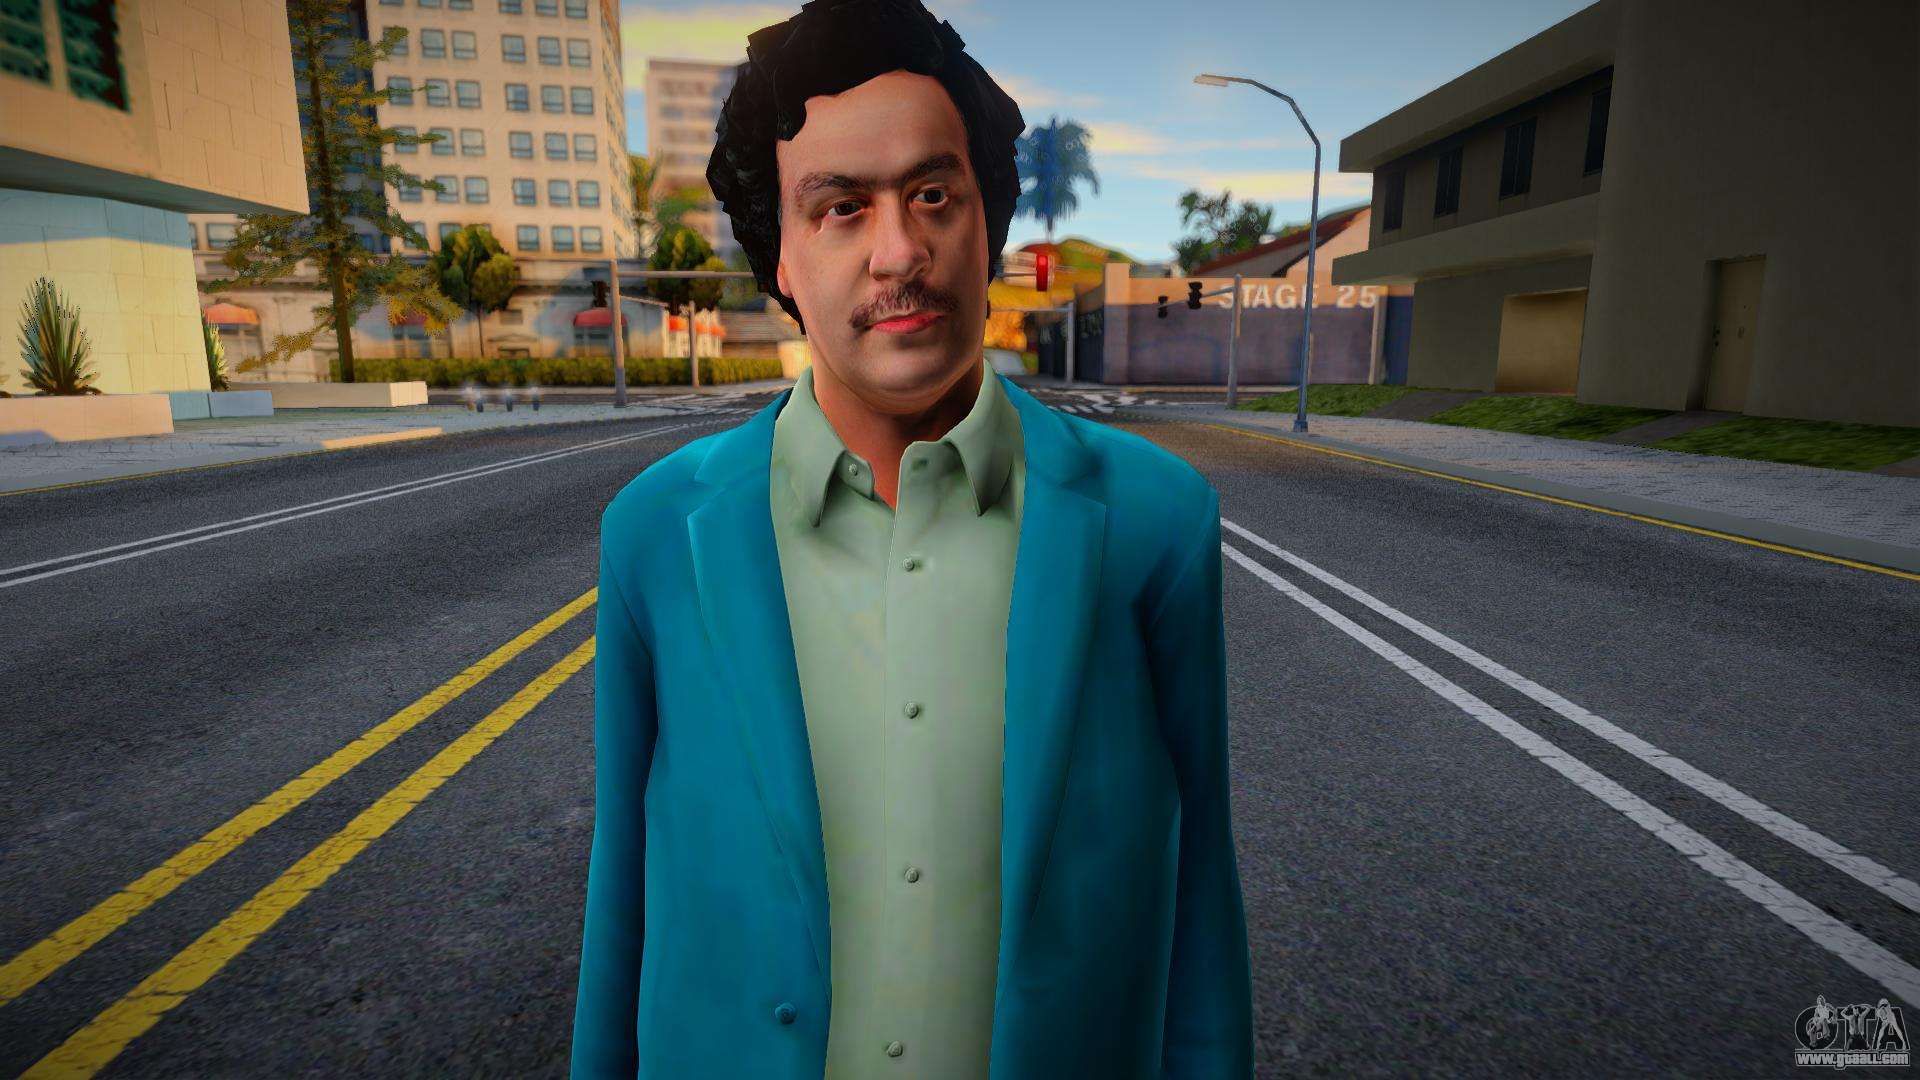 Pablo Escobar for GTA San Andreas